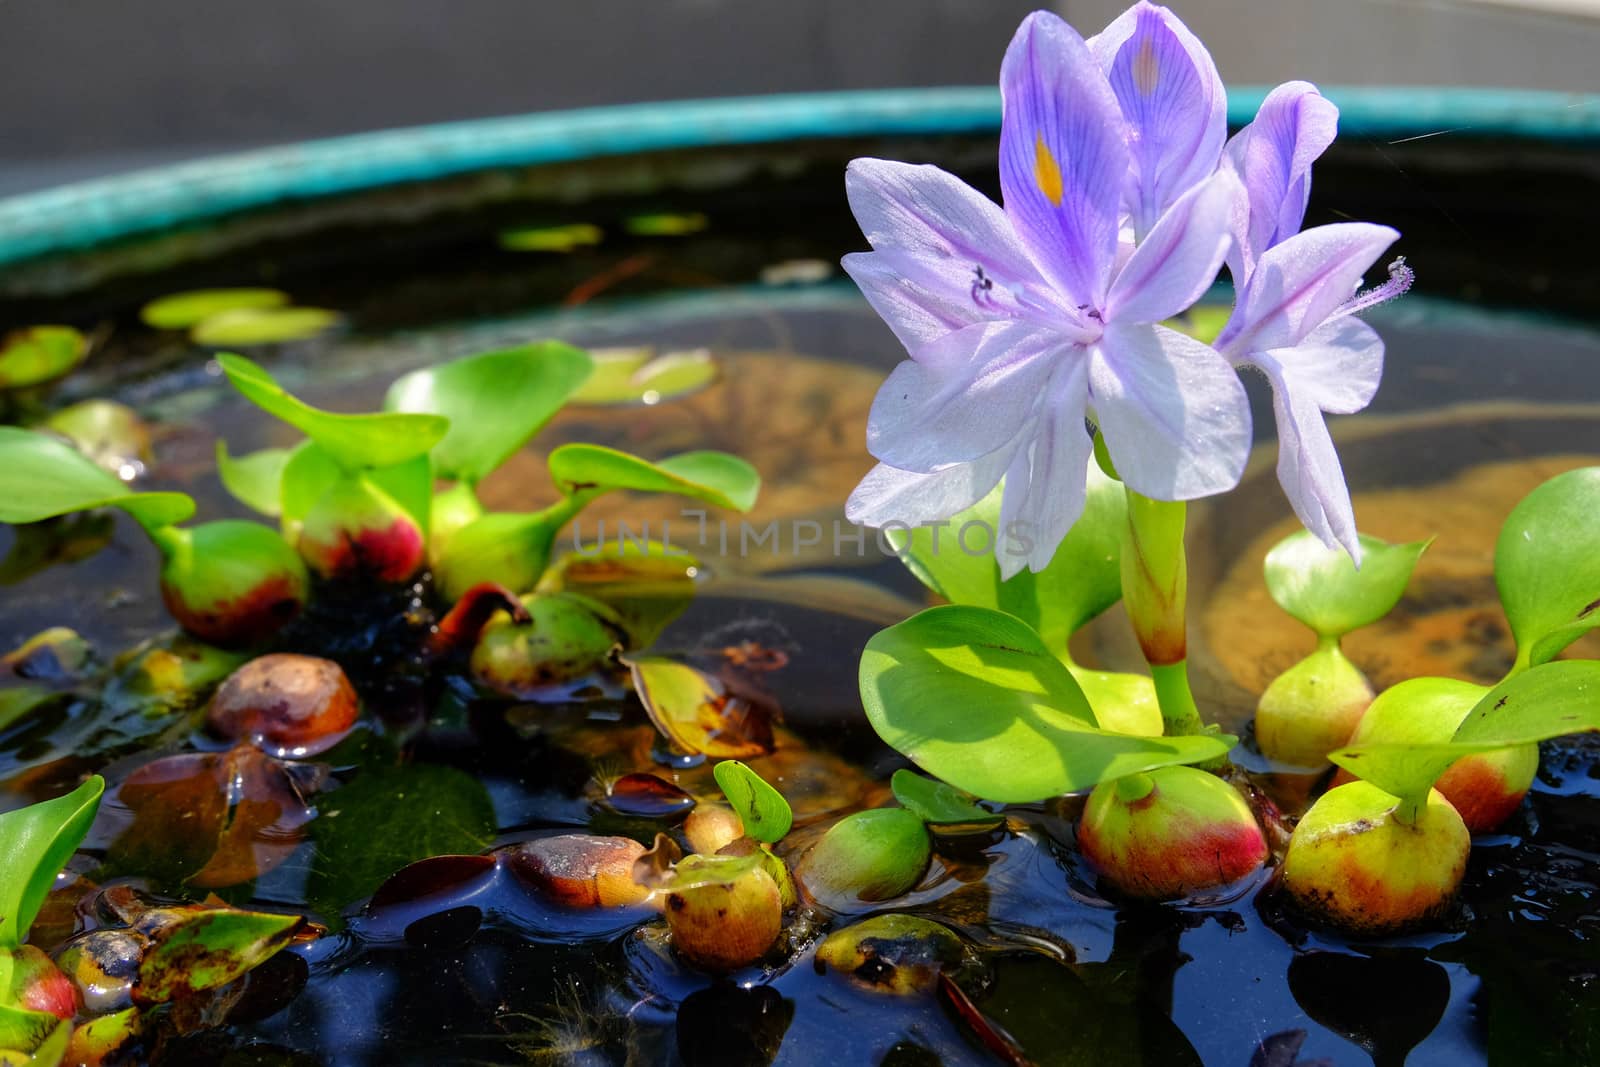 Purple flowers of water hyacinth In the green bath,Eichhornia cr by e22xua